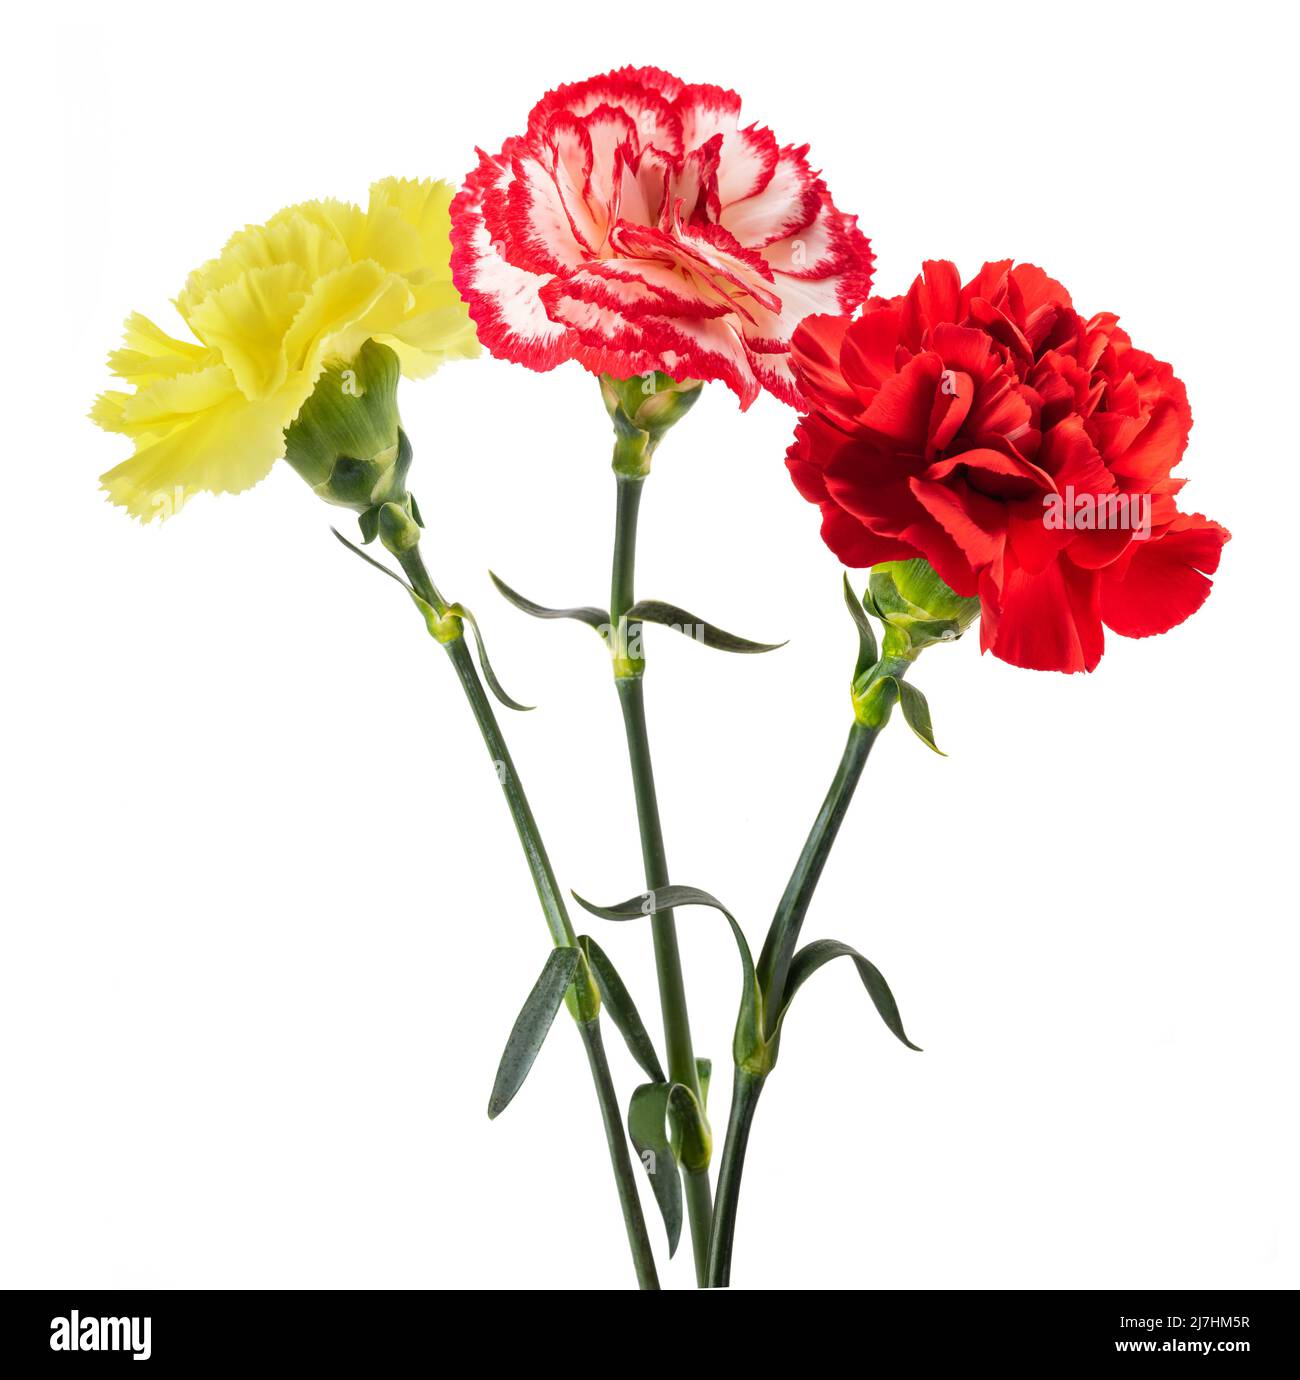 Carnation flowers isolated on white background Stock Photo